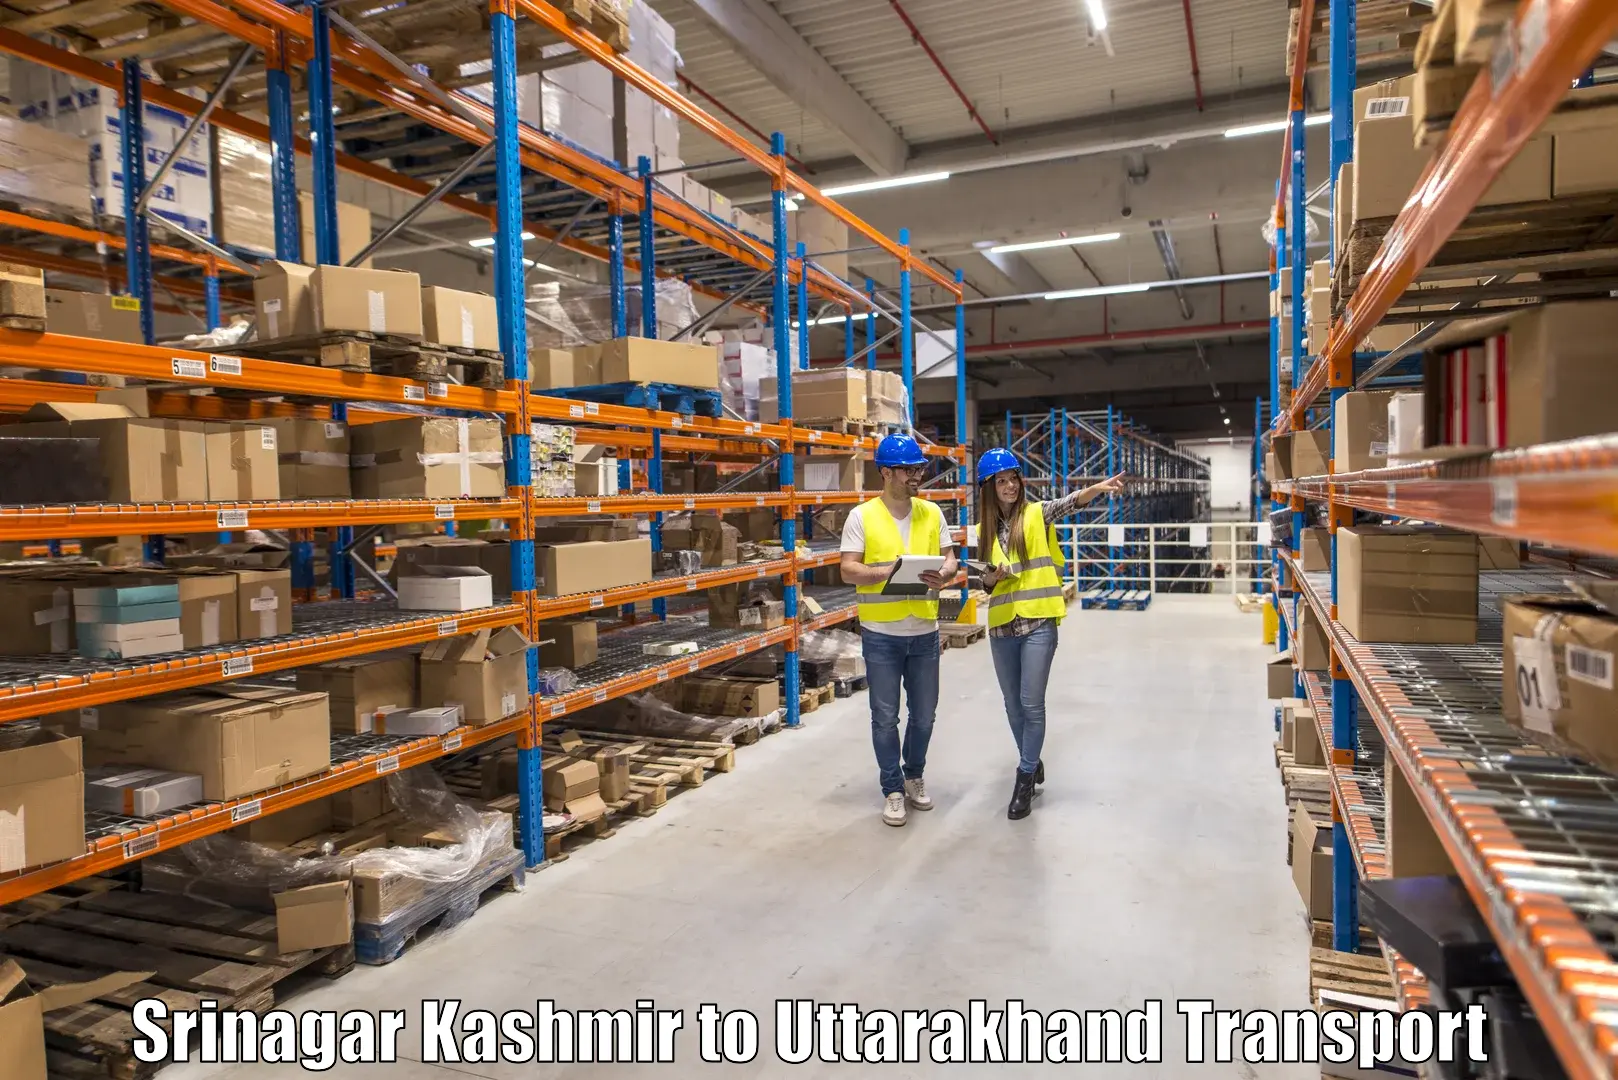 Air freight transport services Srinagar Kashmir to Doiwala